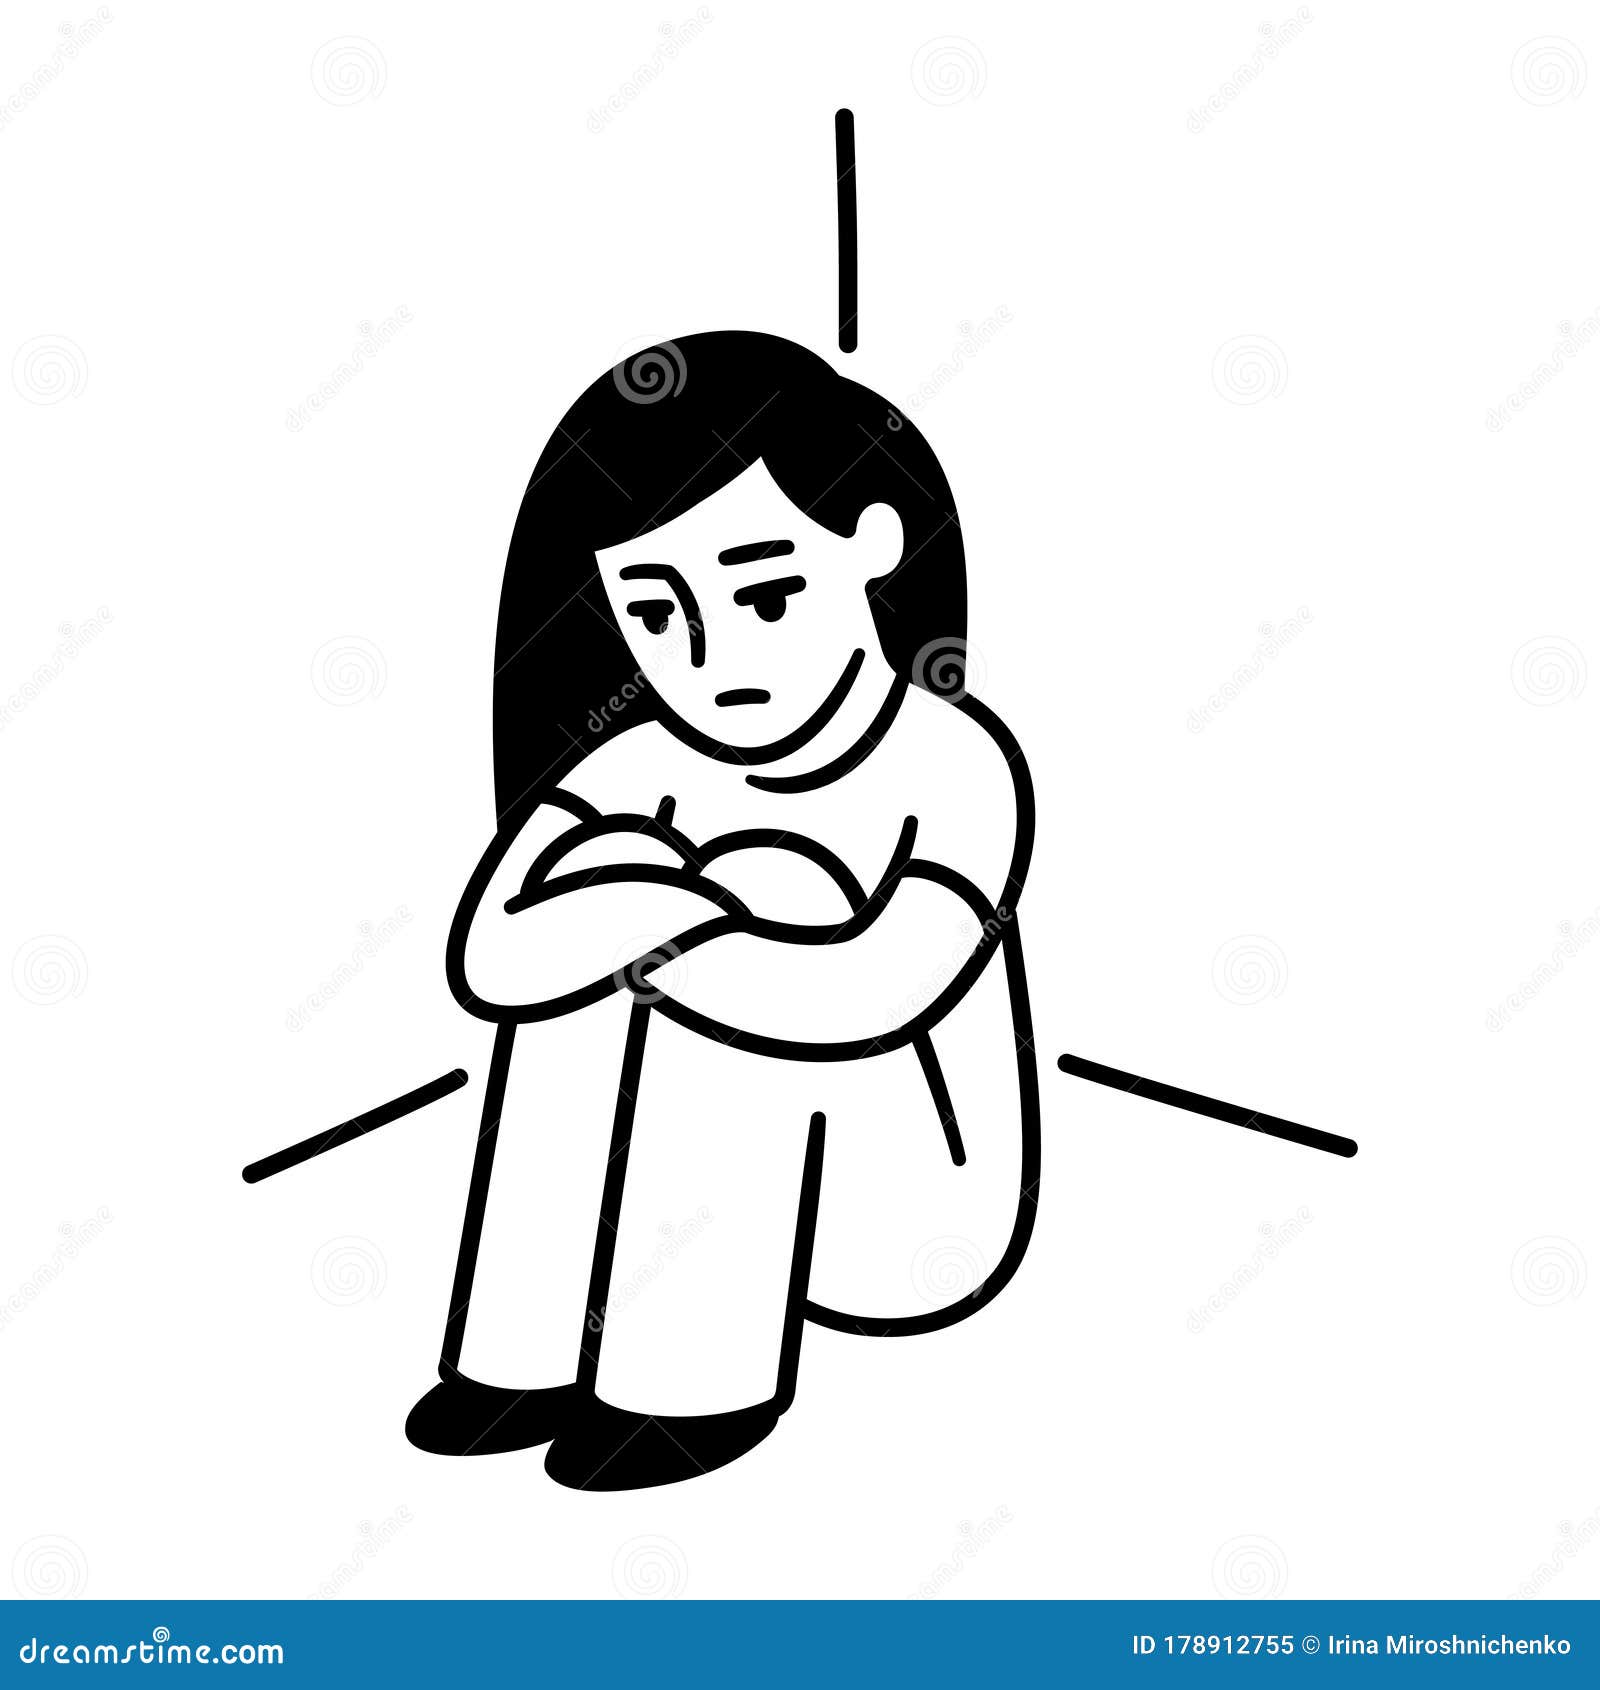 Depressed teenage girl stock vector. Illustration of cartoon - 178912755